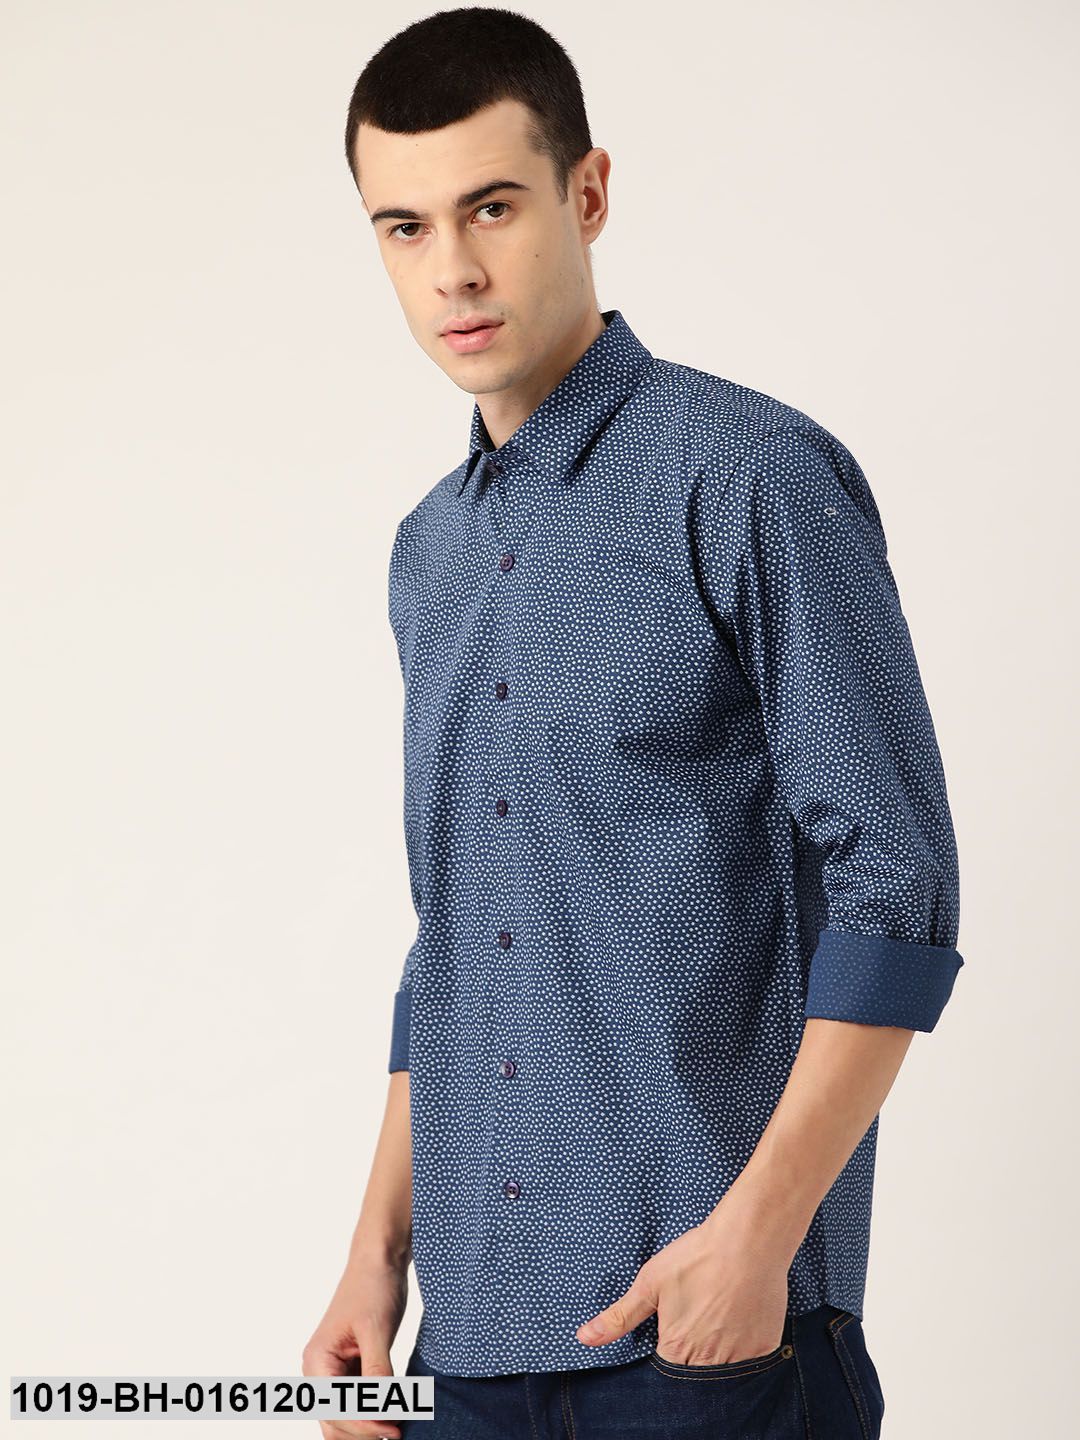 Men's Cotton Teal Blue & Grey Printed Casual Shirt - Sojanya